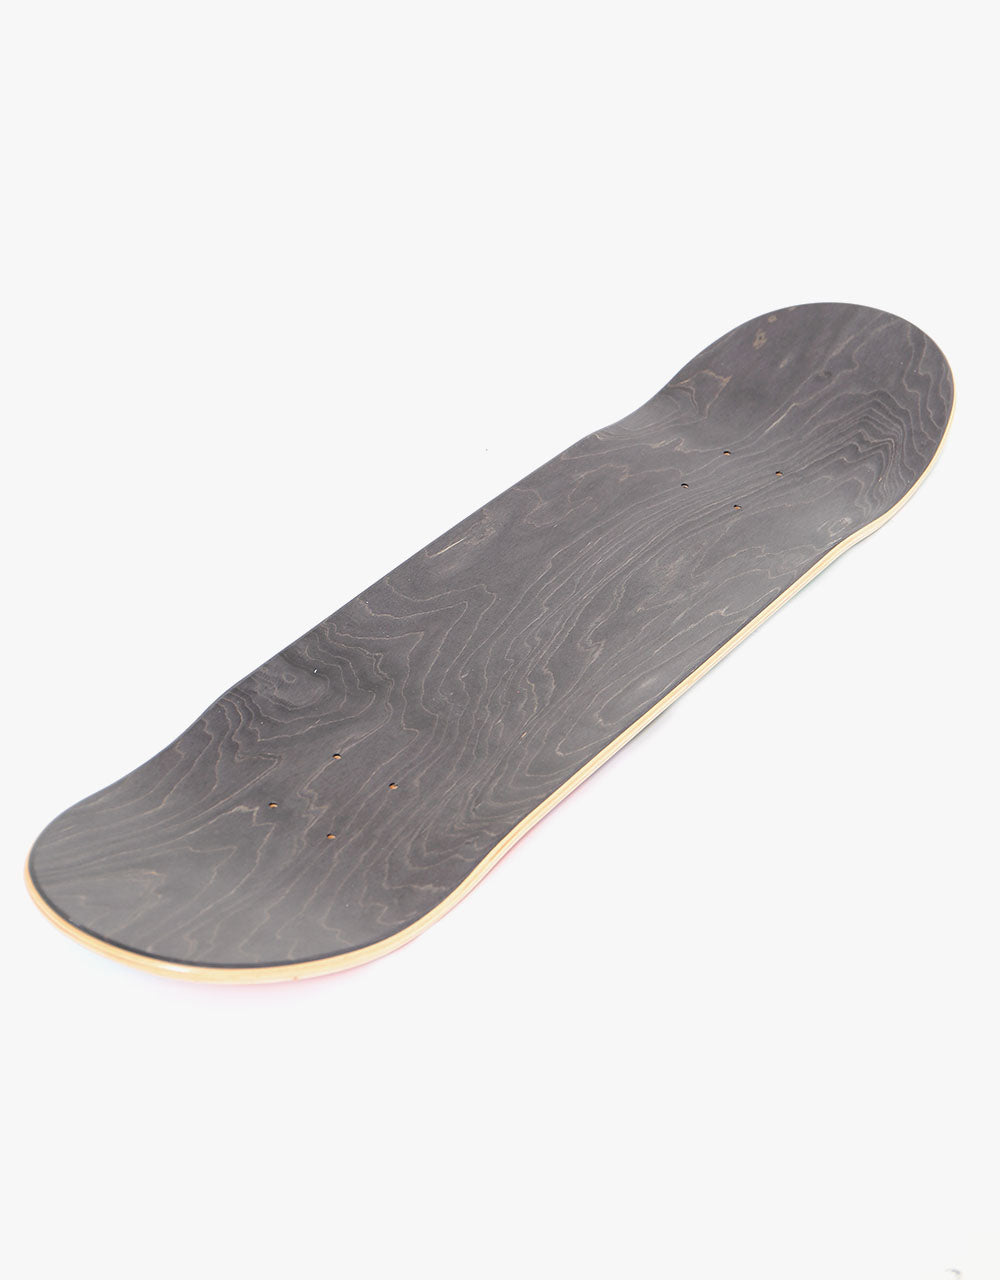 Route One Cut & Paste Lips 'OG Shape' Skateboard Deck - 8.25"